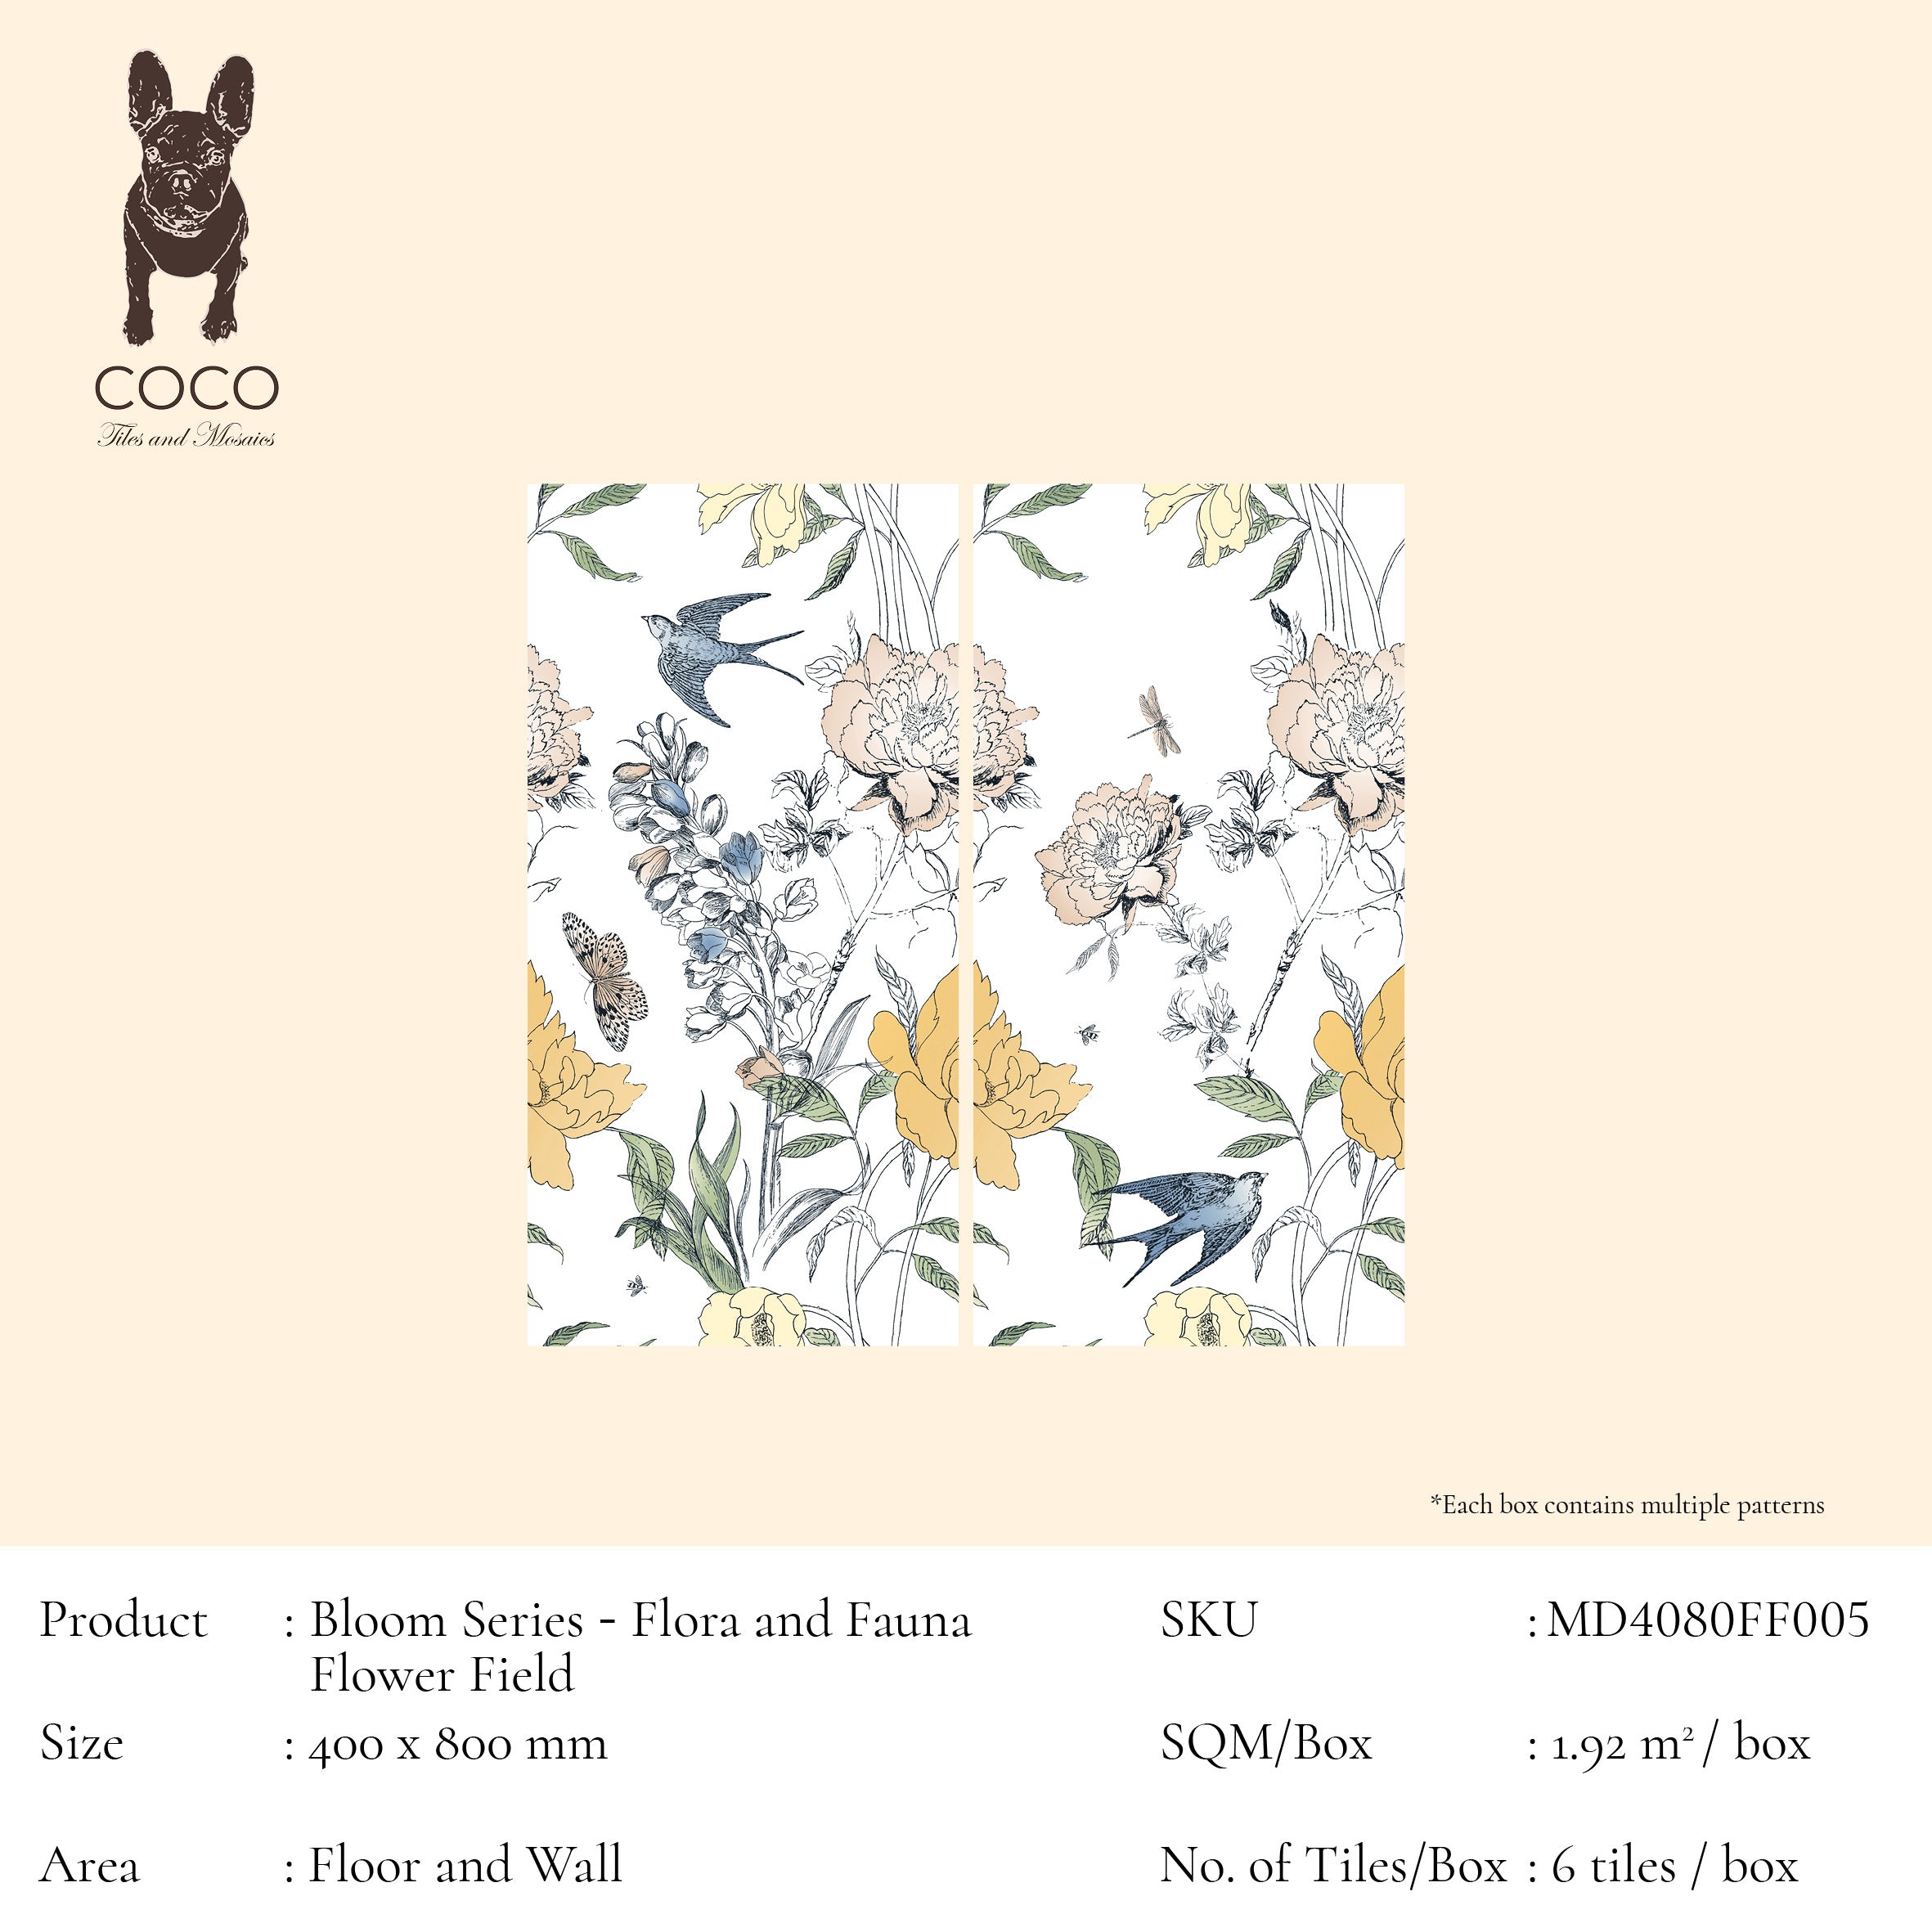 Bloom Series - Flora and Fauna Summer Flower Field 400x800mm Ceramic Tile